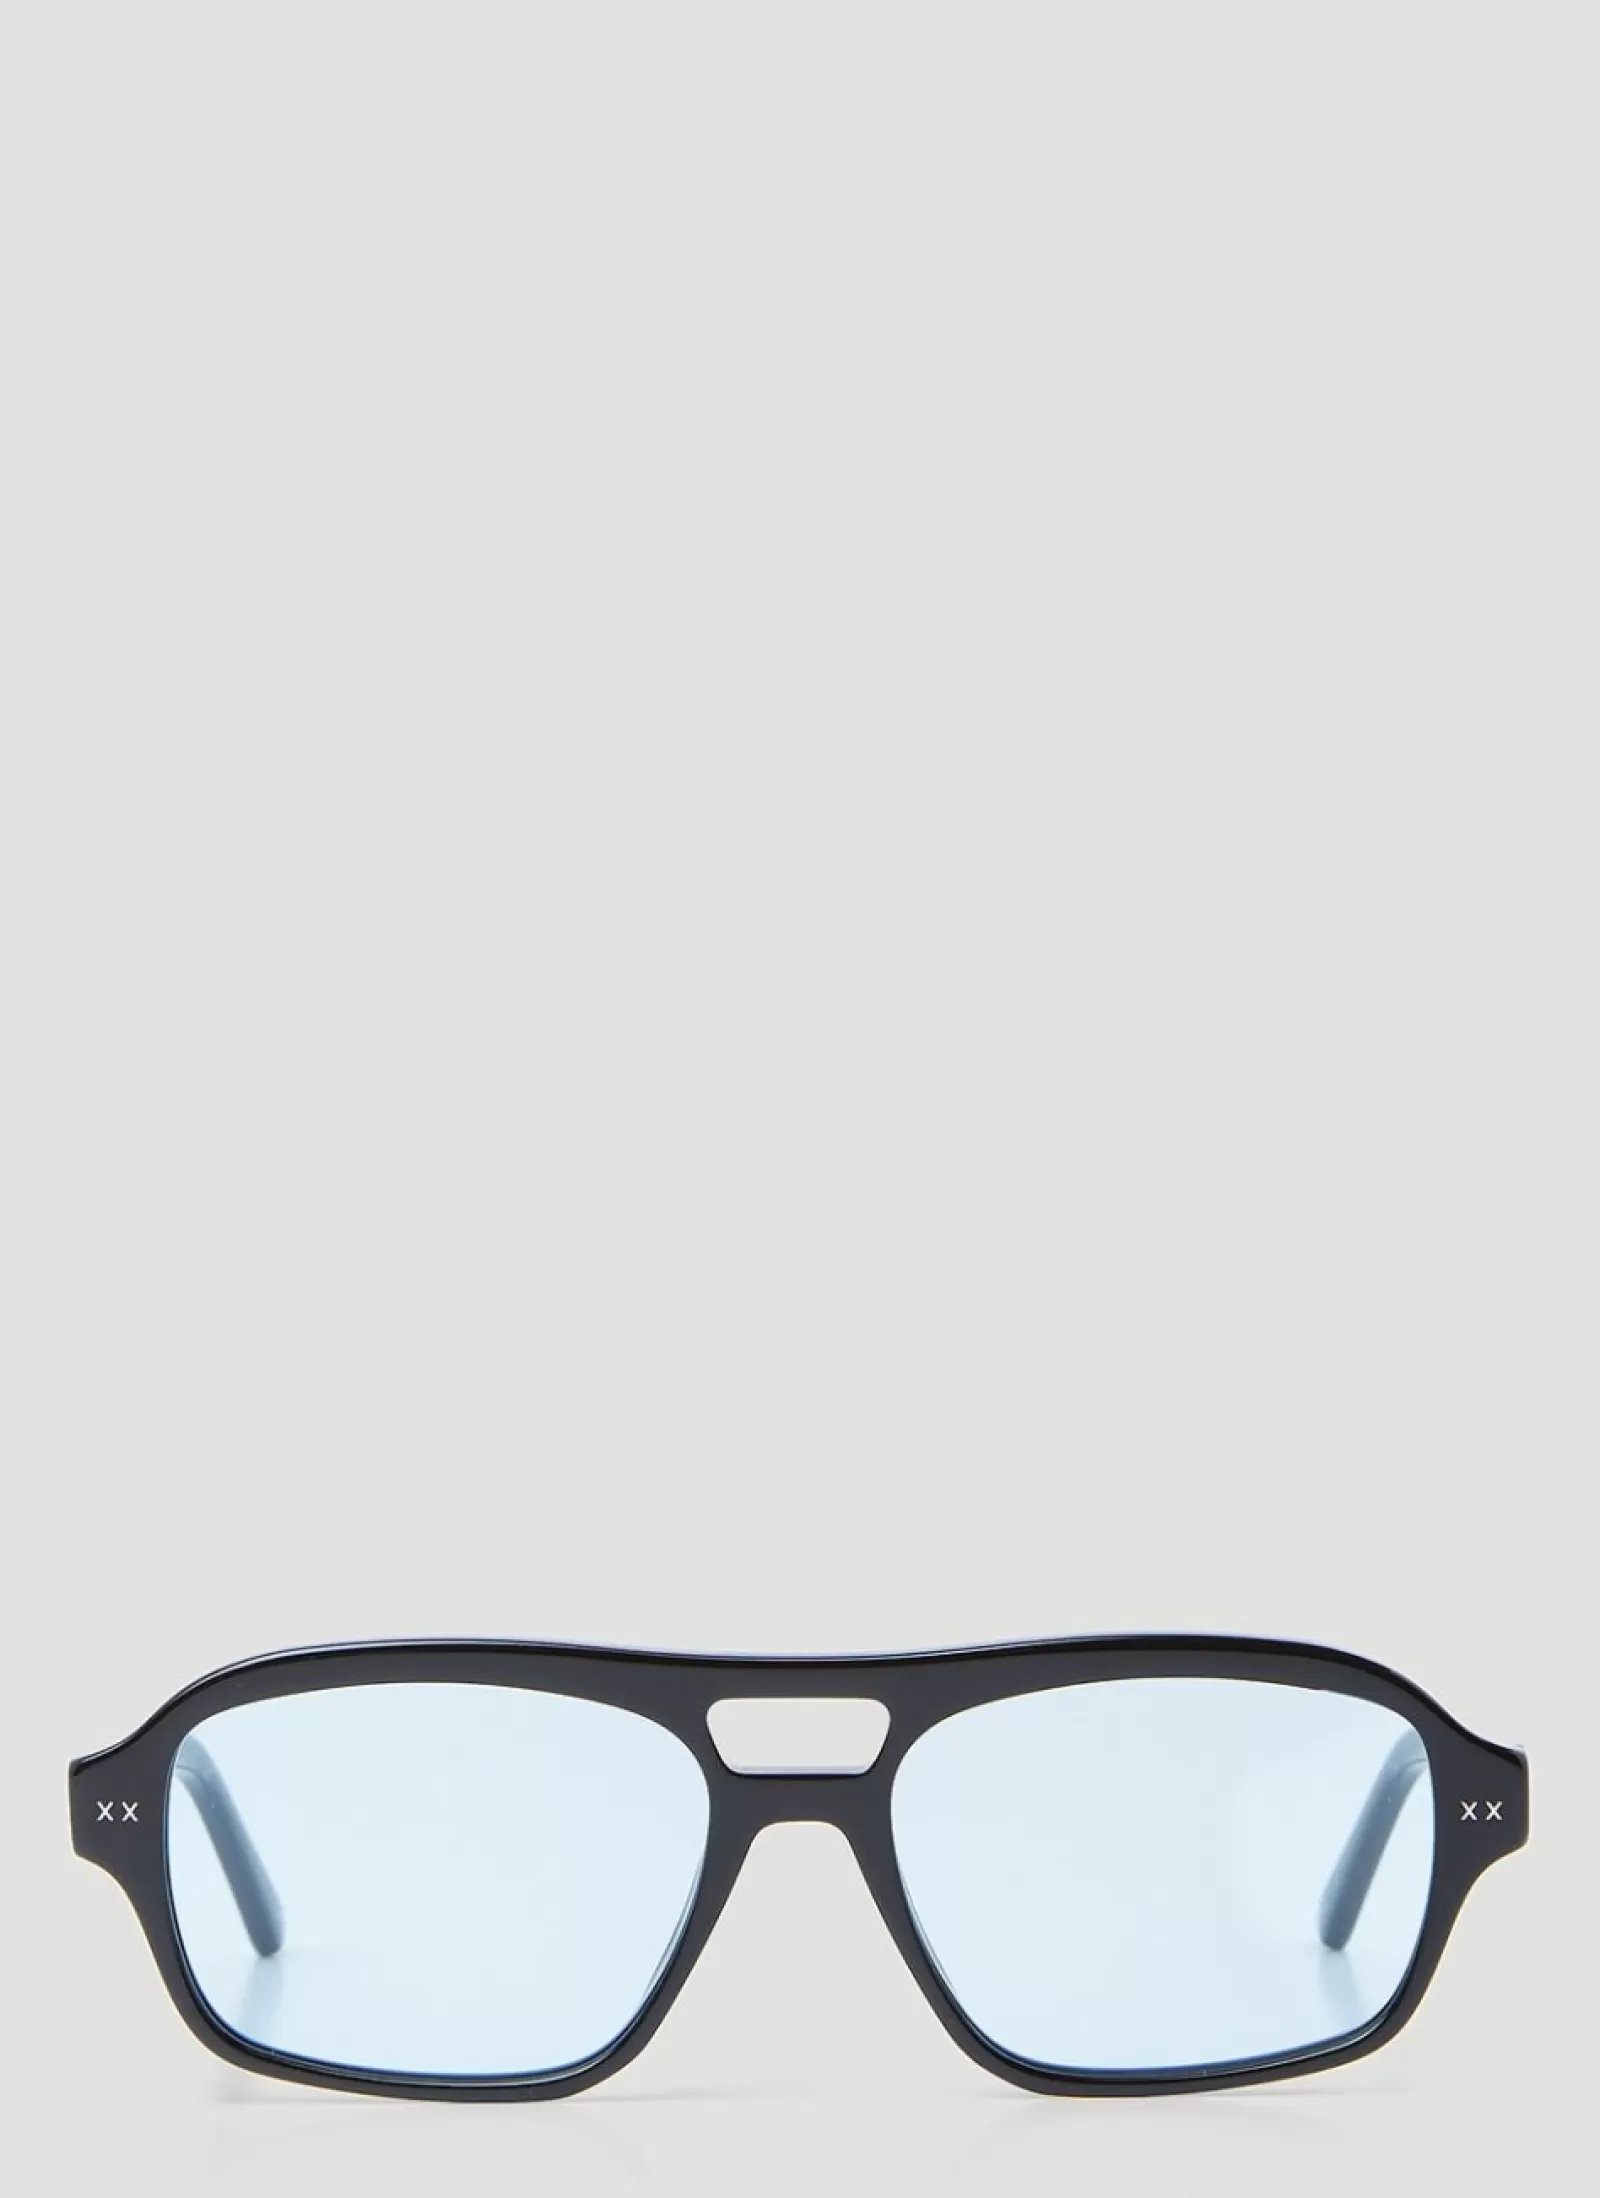 Online Lexxola Damien Aviator Sunglasses Black